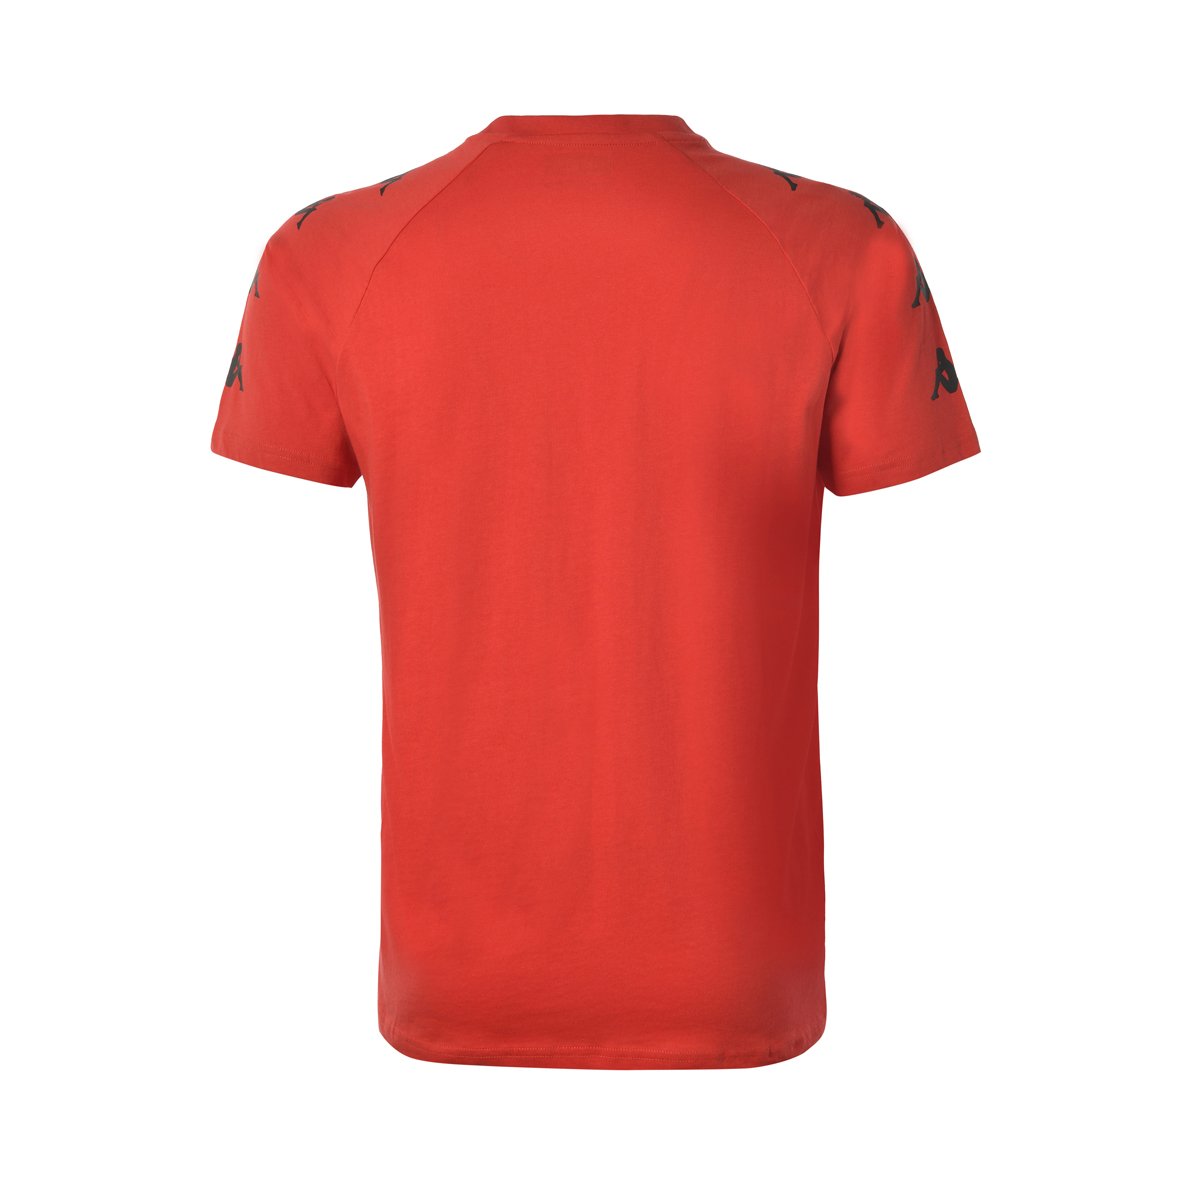 Camiseta Klake rojo hombre - Imagen 5